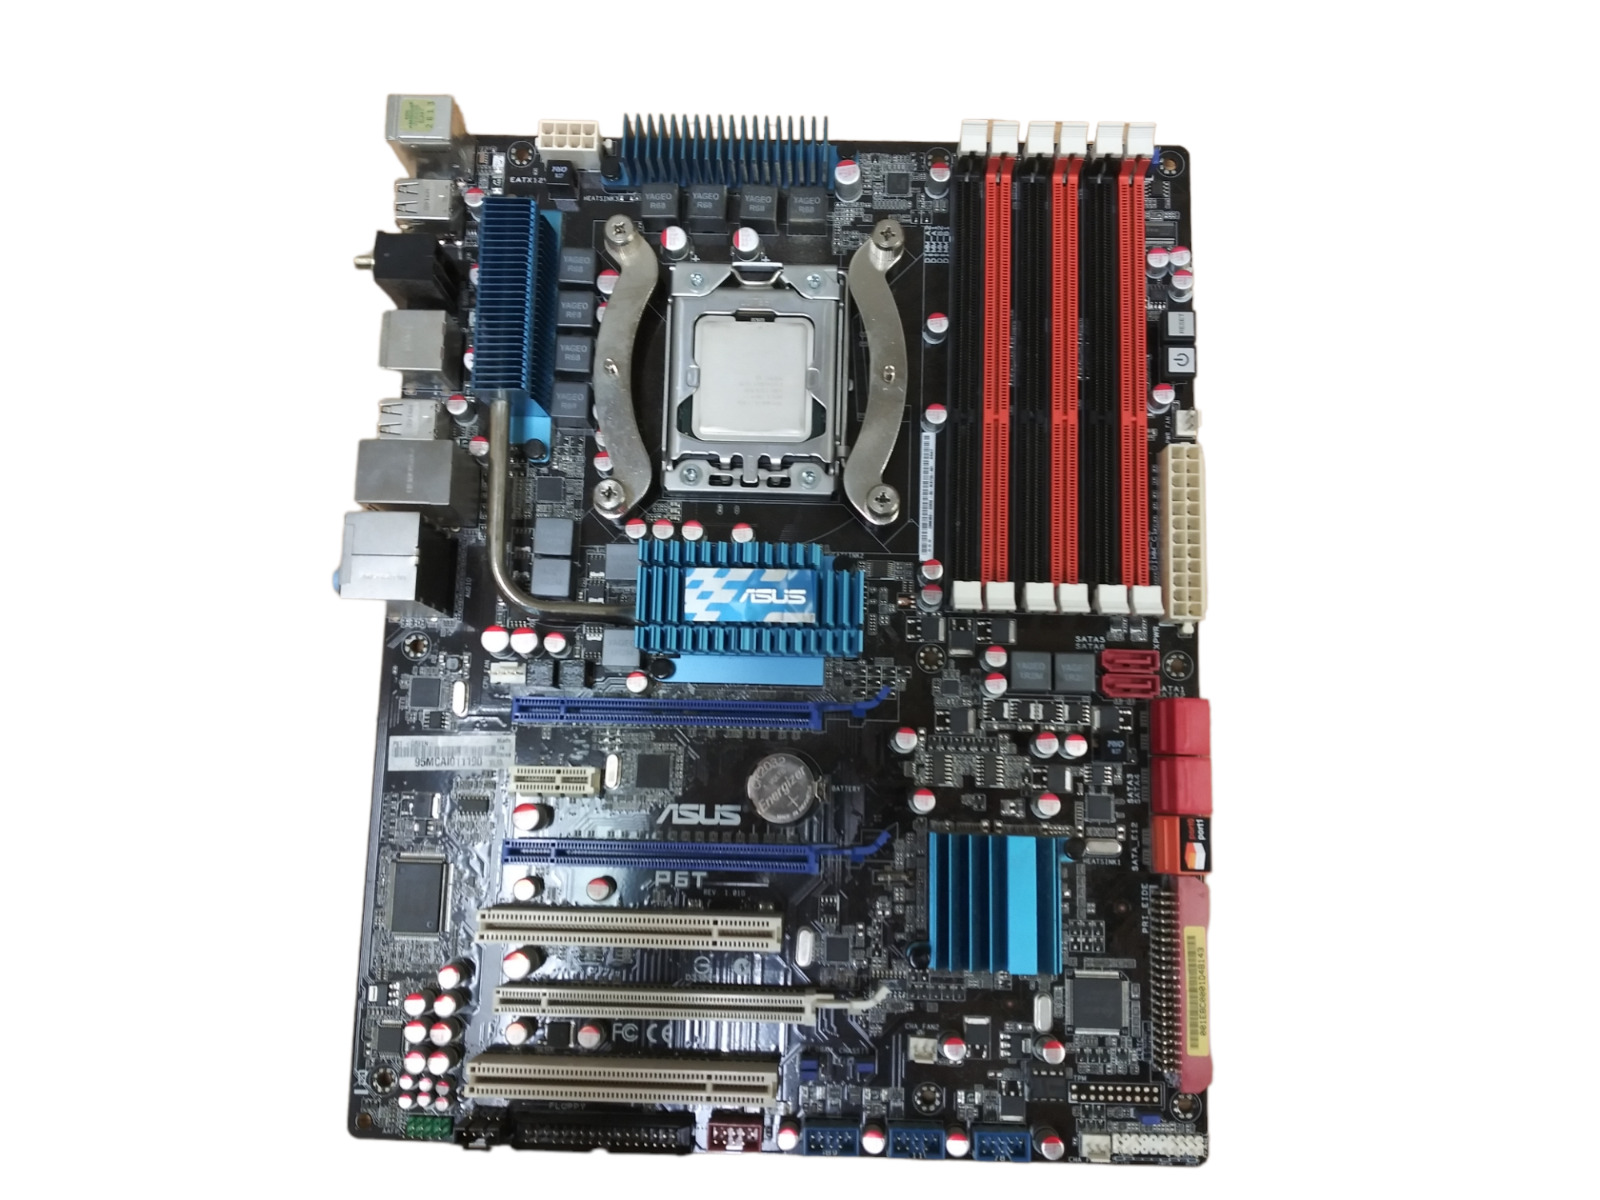 ASUS P6T SE Chipset Intel X58 LGA1366 DDR3 Motherboard w/ i7-920 CPU slbej